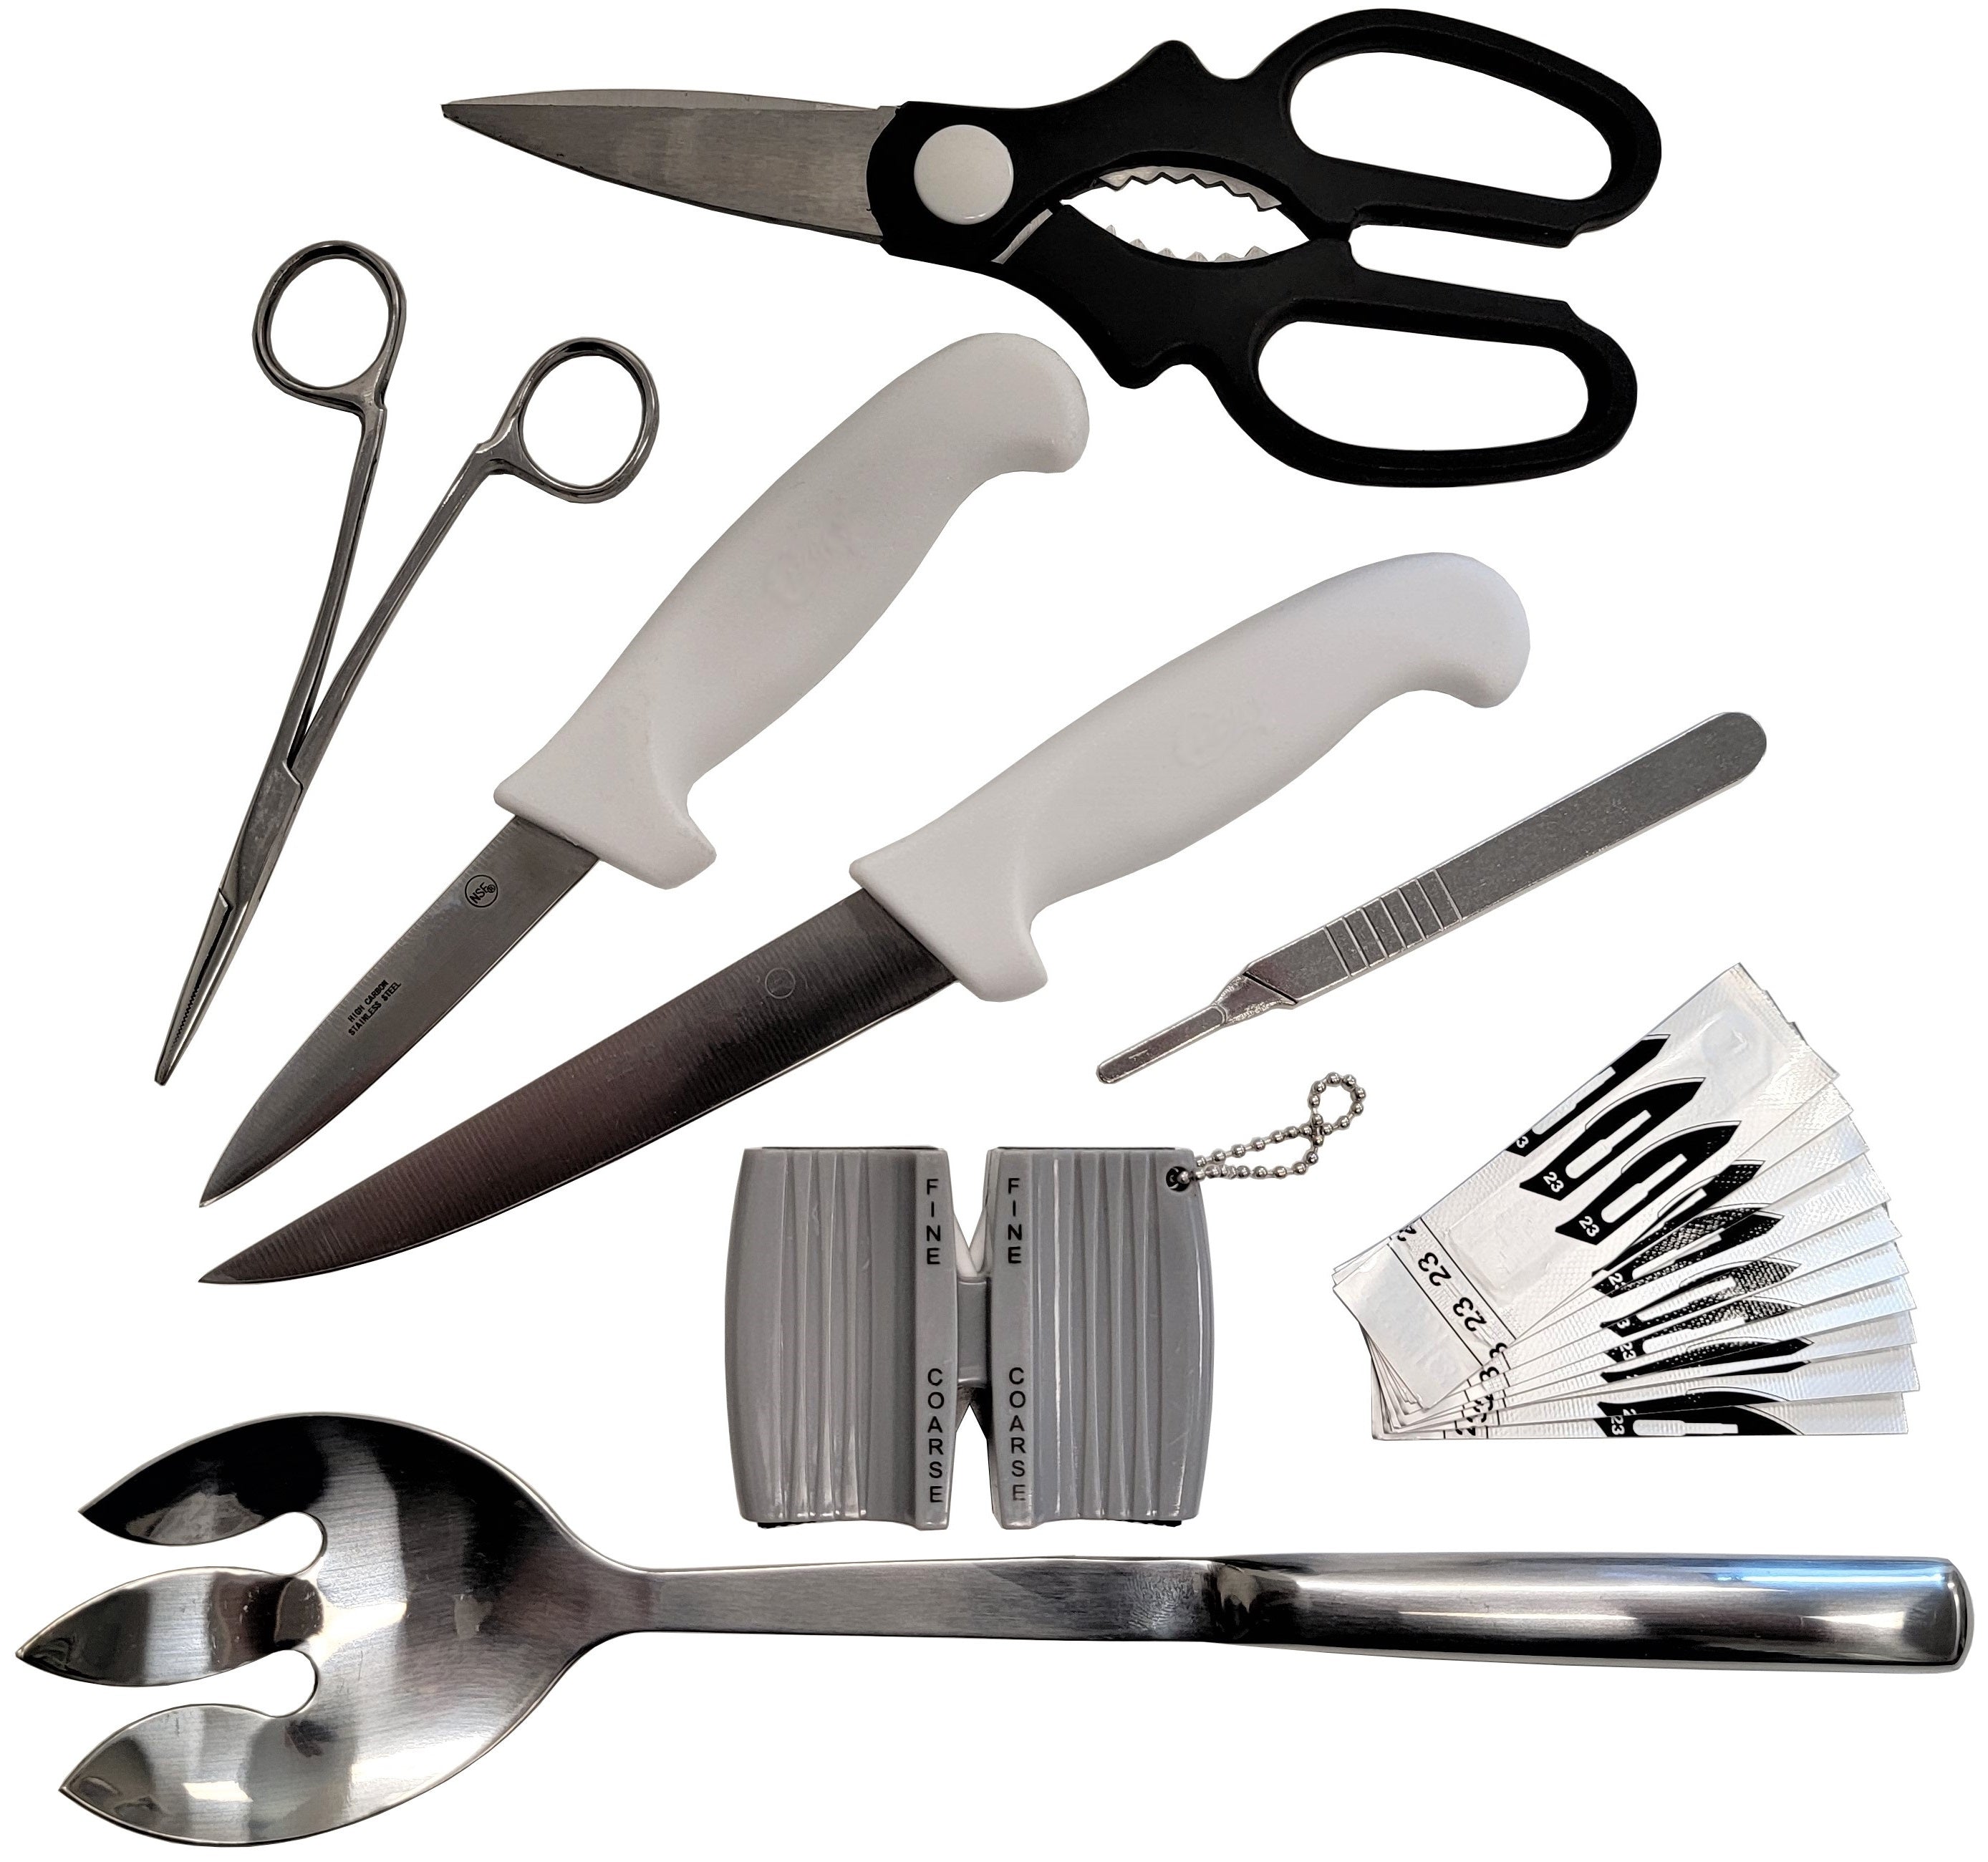 Quail Processing kit, S8 plucker, Extra Small kill cone, & Scissors